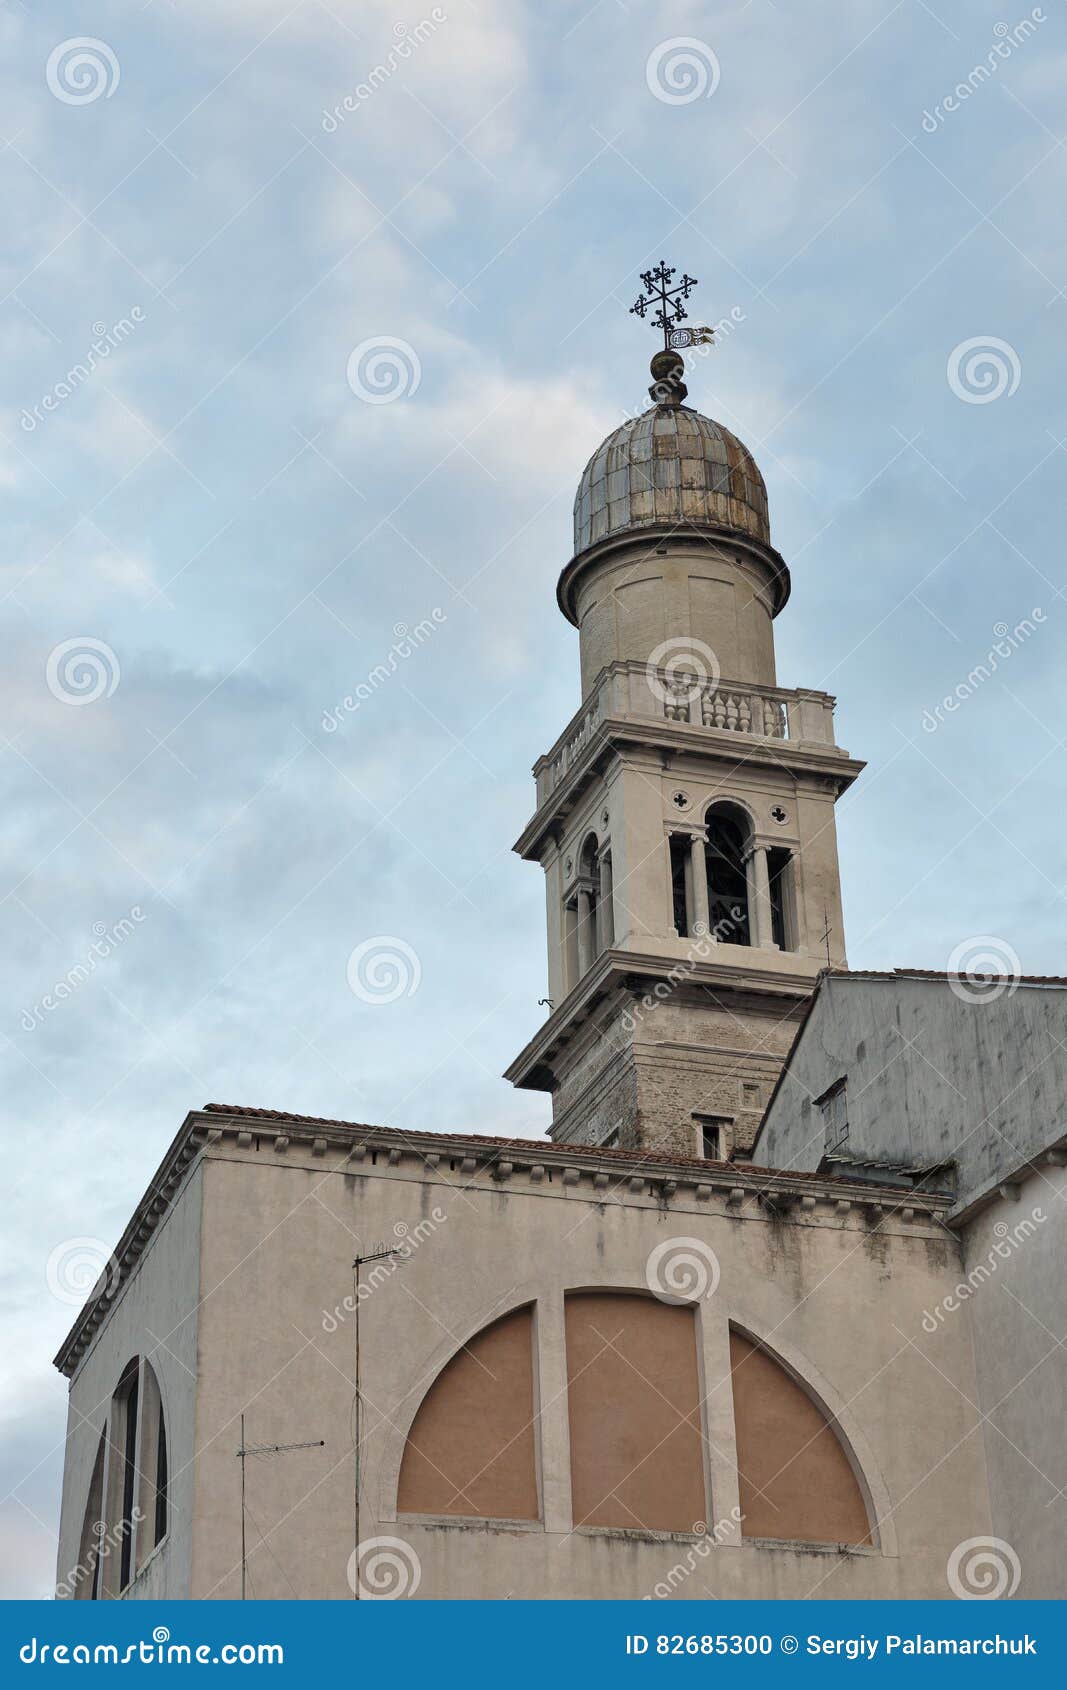 san pantalon church bell tower at sunset in venice, italy.